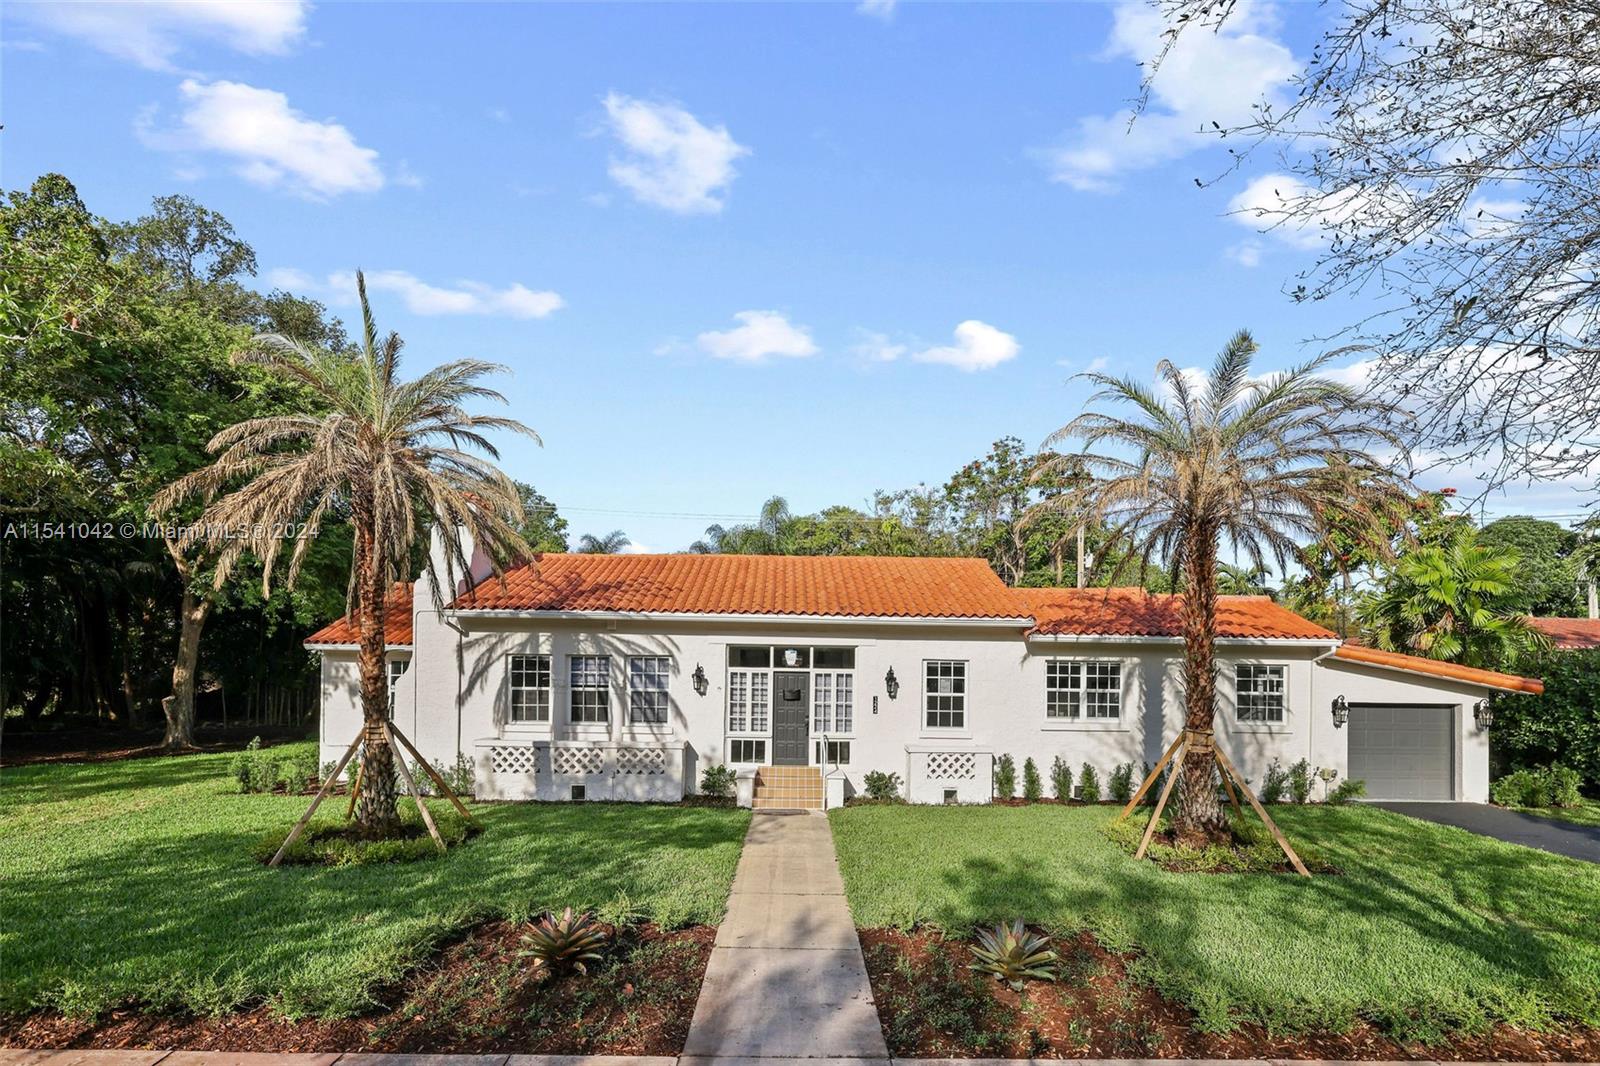 Rental Property at 1224 Country Club Prado, Coral Gables, Broward County, Florida - Bedrooms: 3 
Bathrooms: 3  - $10,000 MO.